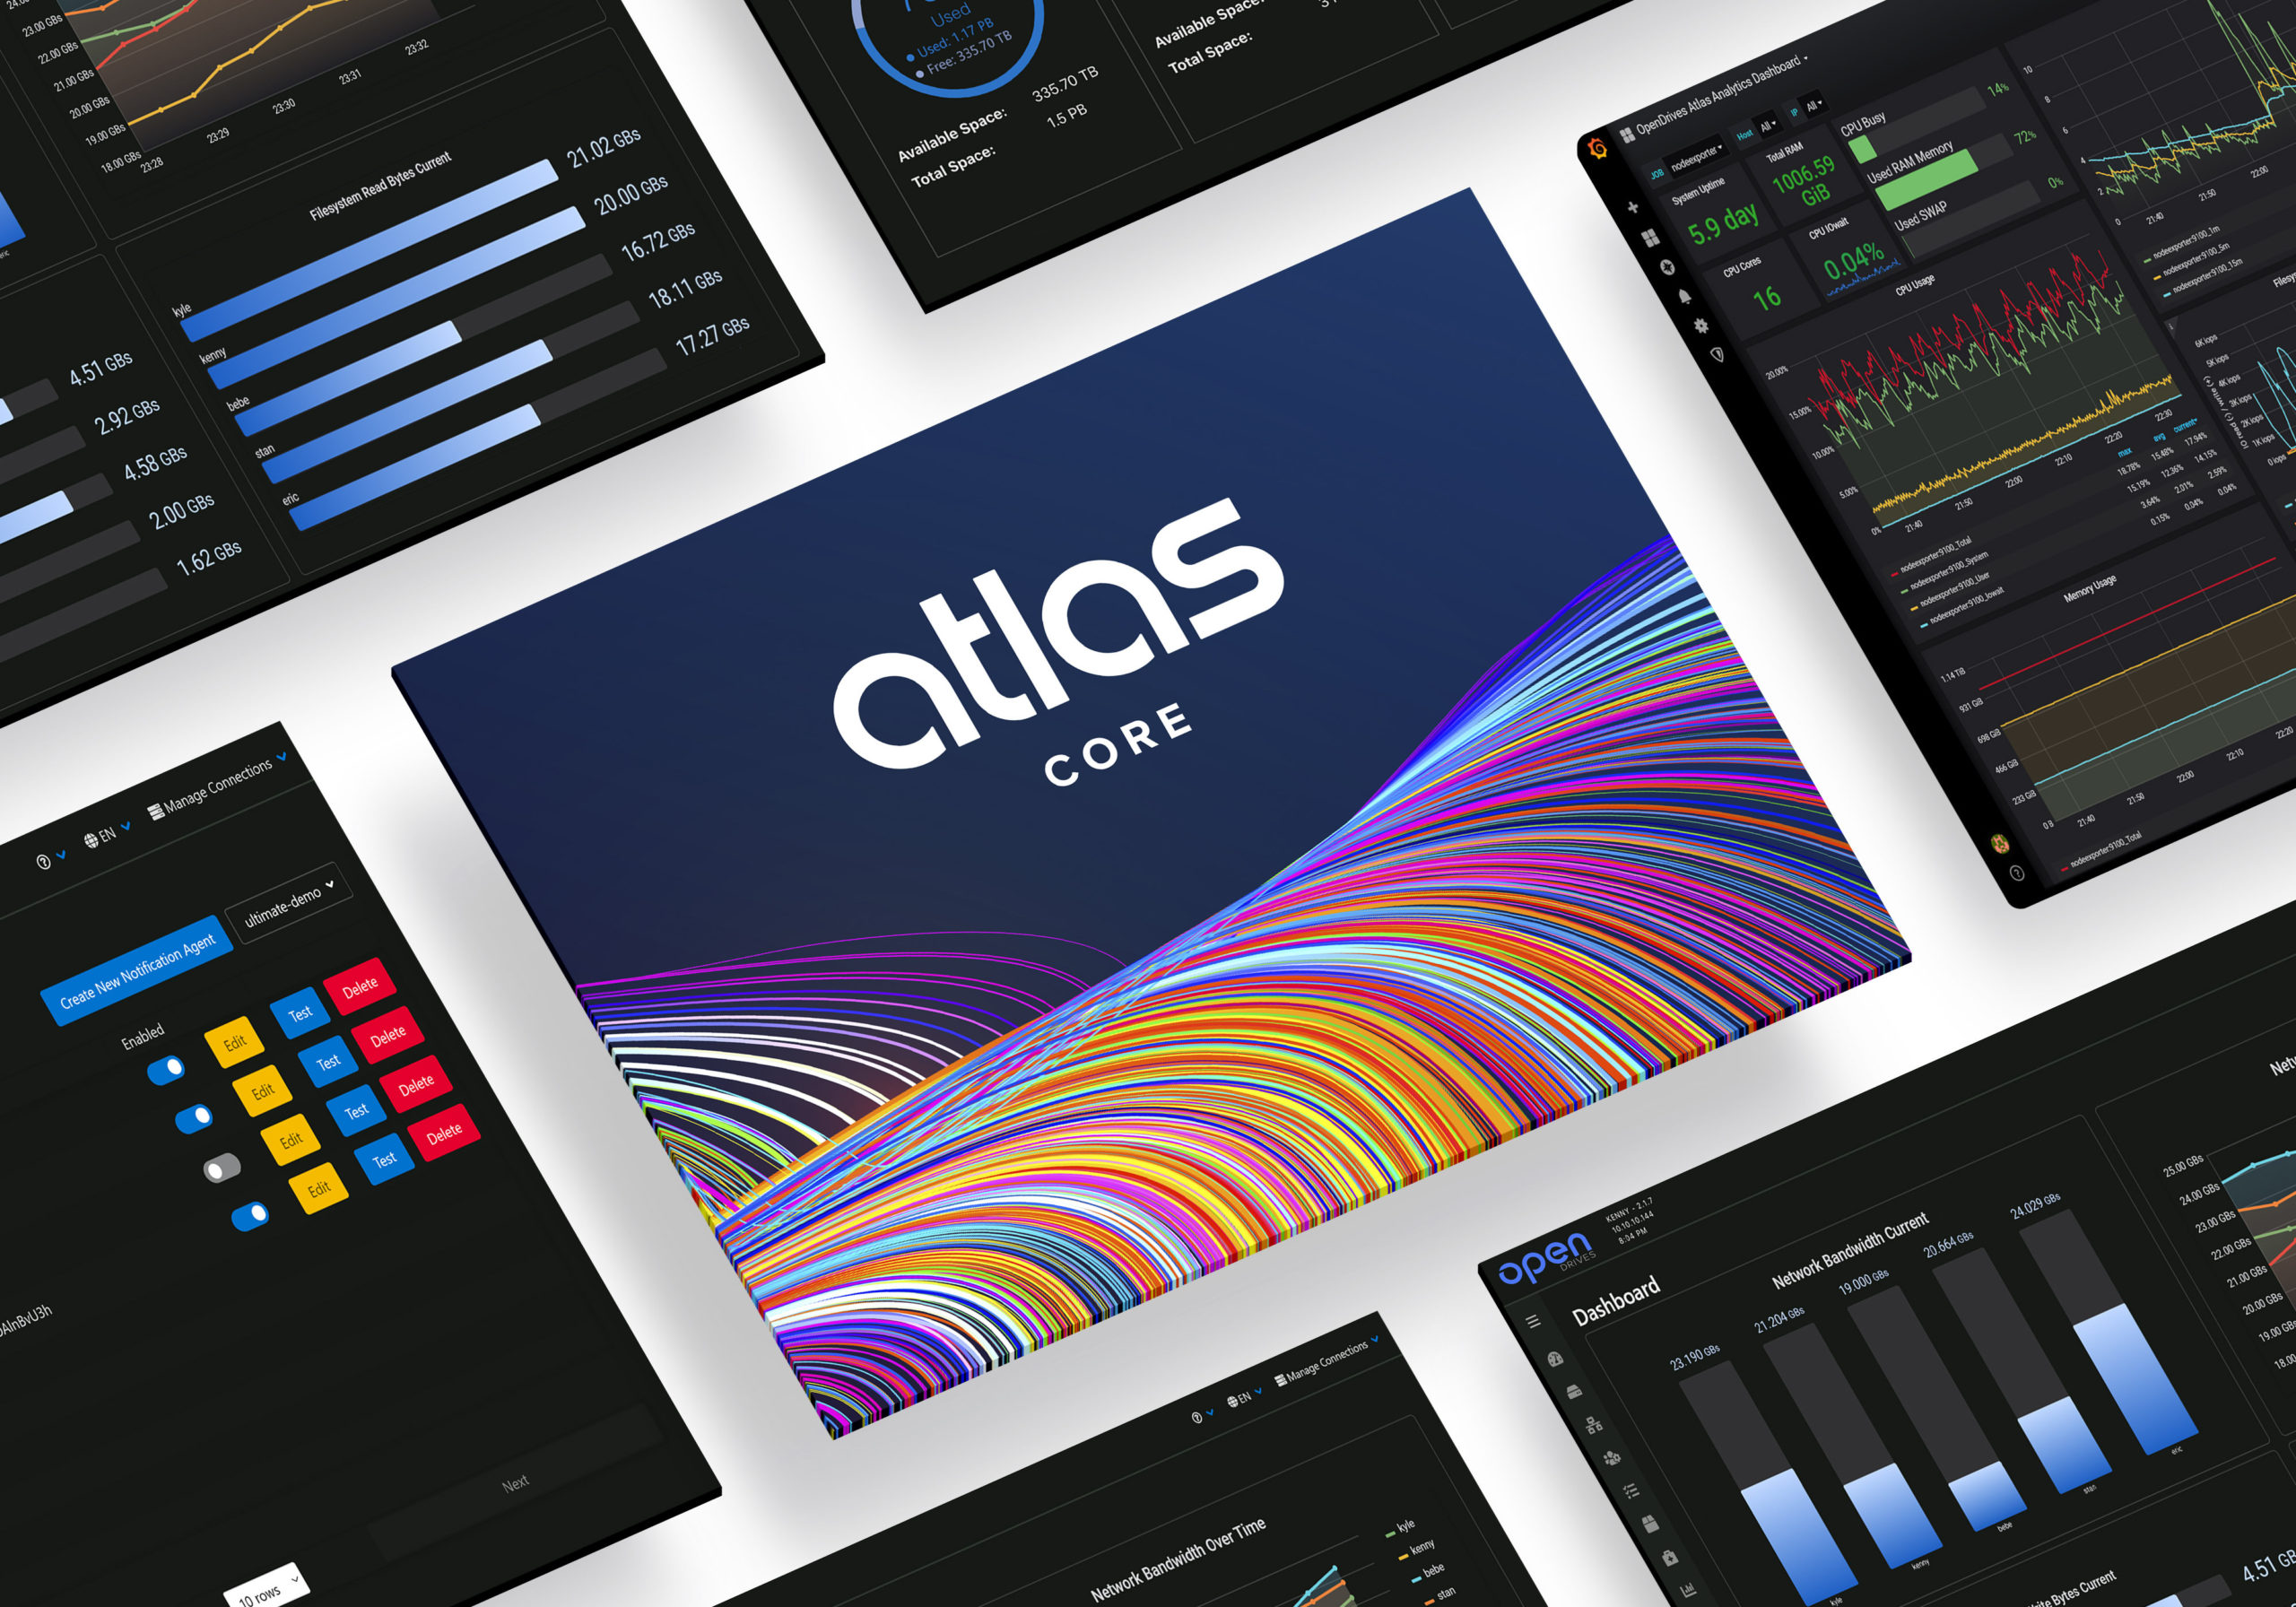 Atlas Core screens scaled